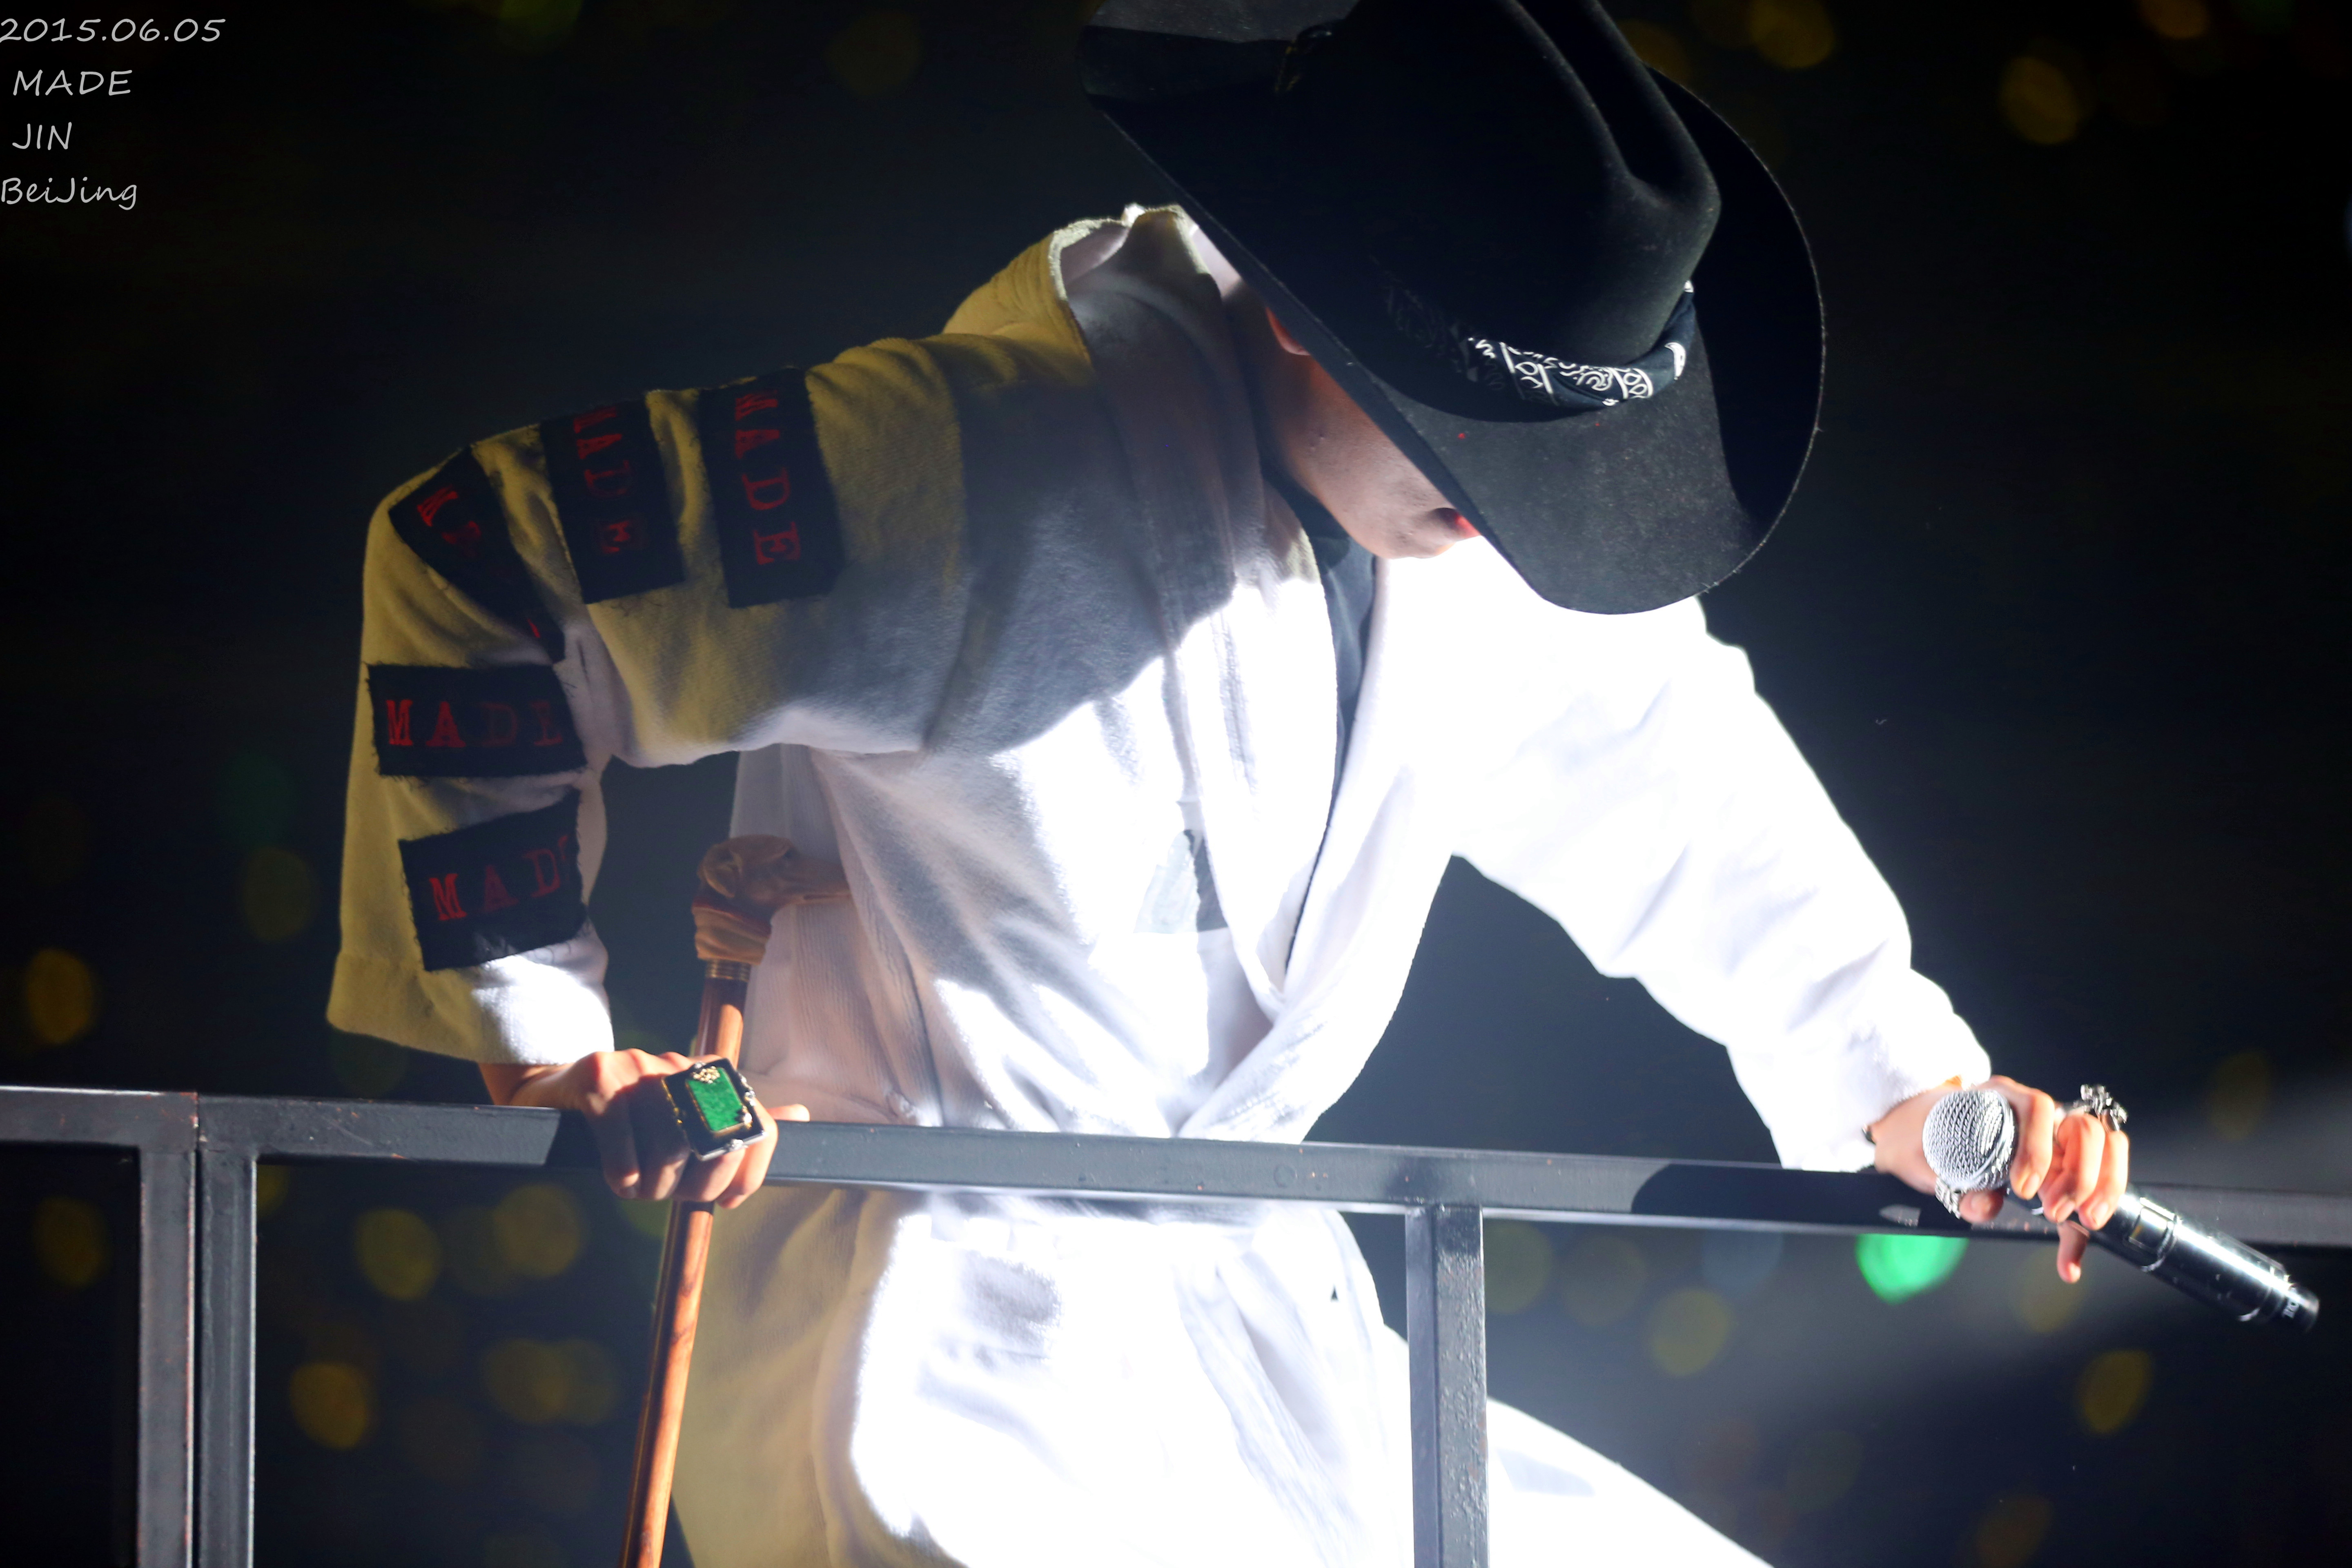 BIGBANG - Made Tour 2015 - Beijing - 05jun2015 - G-Jin - 22.jpg